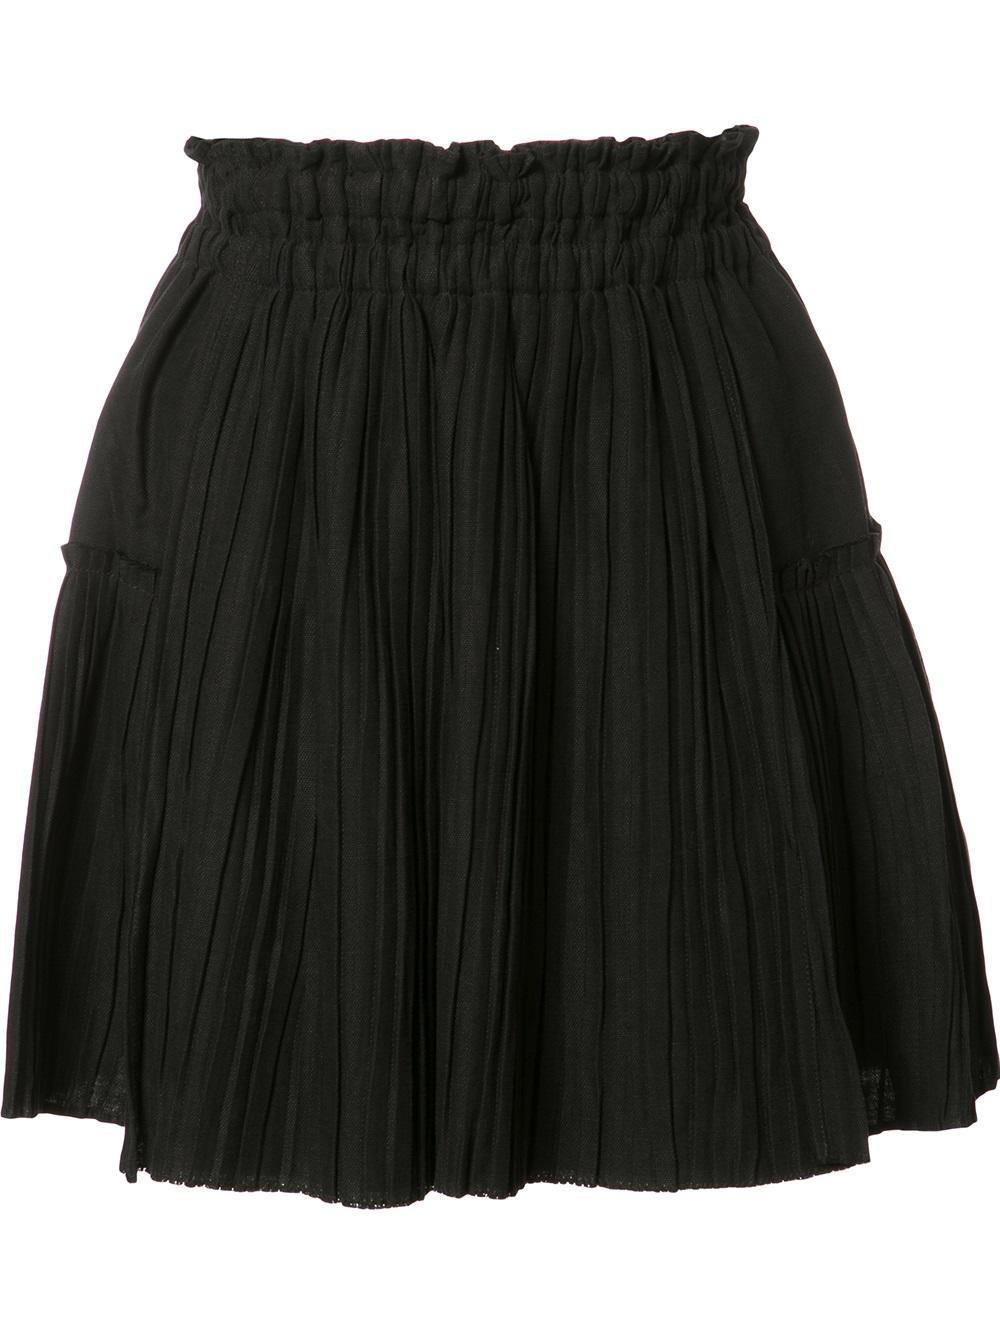 Lyst - Apiece apart Gathered Mini Skirt in Black